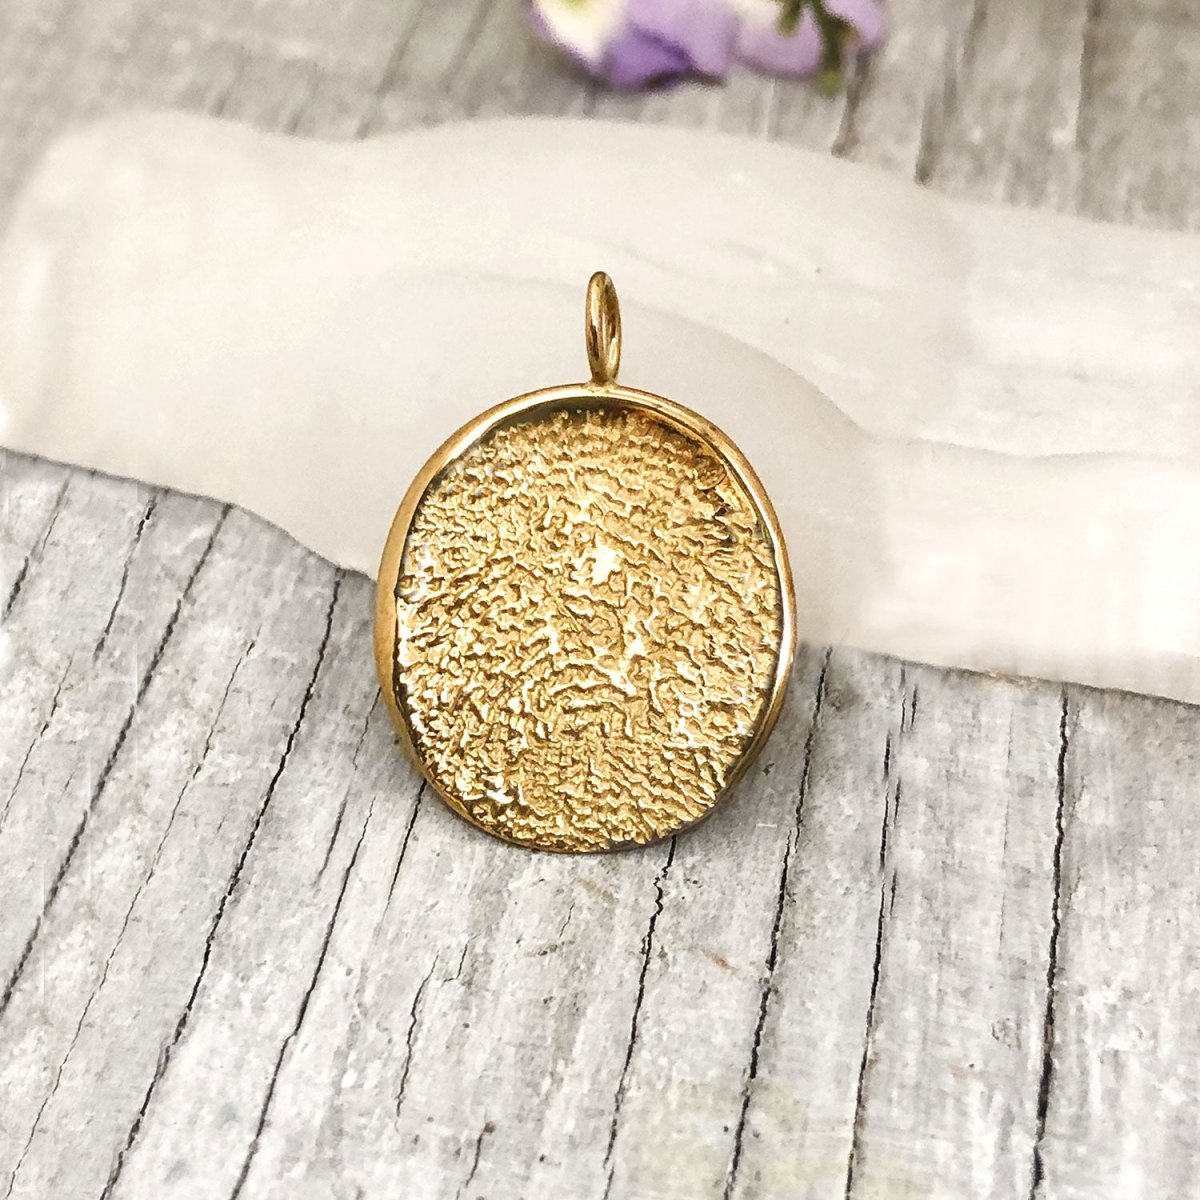 14k Gold Raised Edge Organic Oval Shaped Fingerprint Pendant from Digital Image - Luxe Design Jewellery